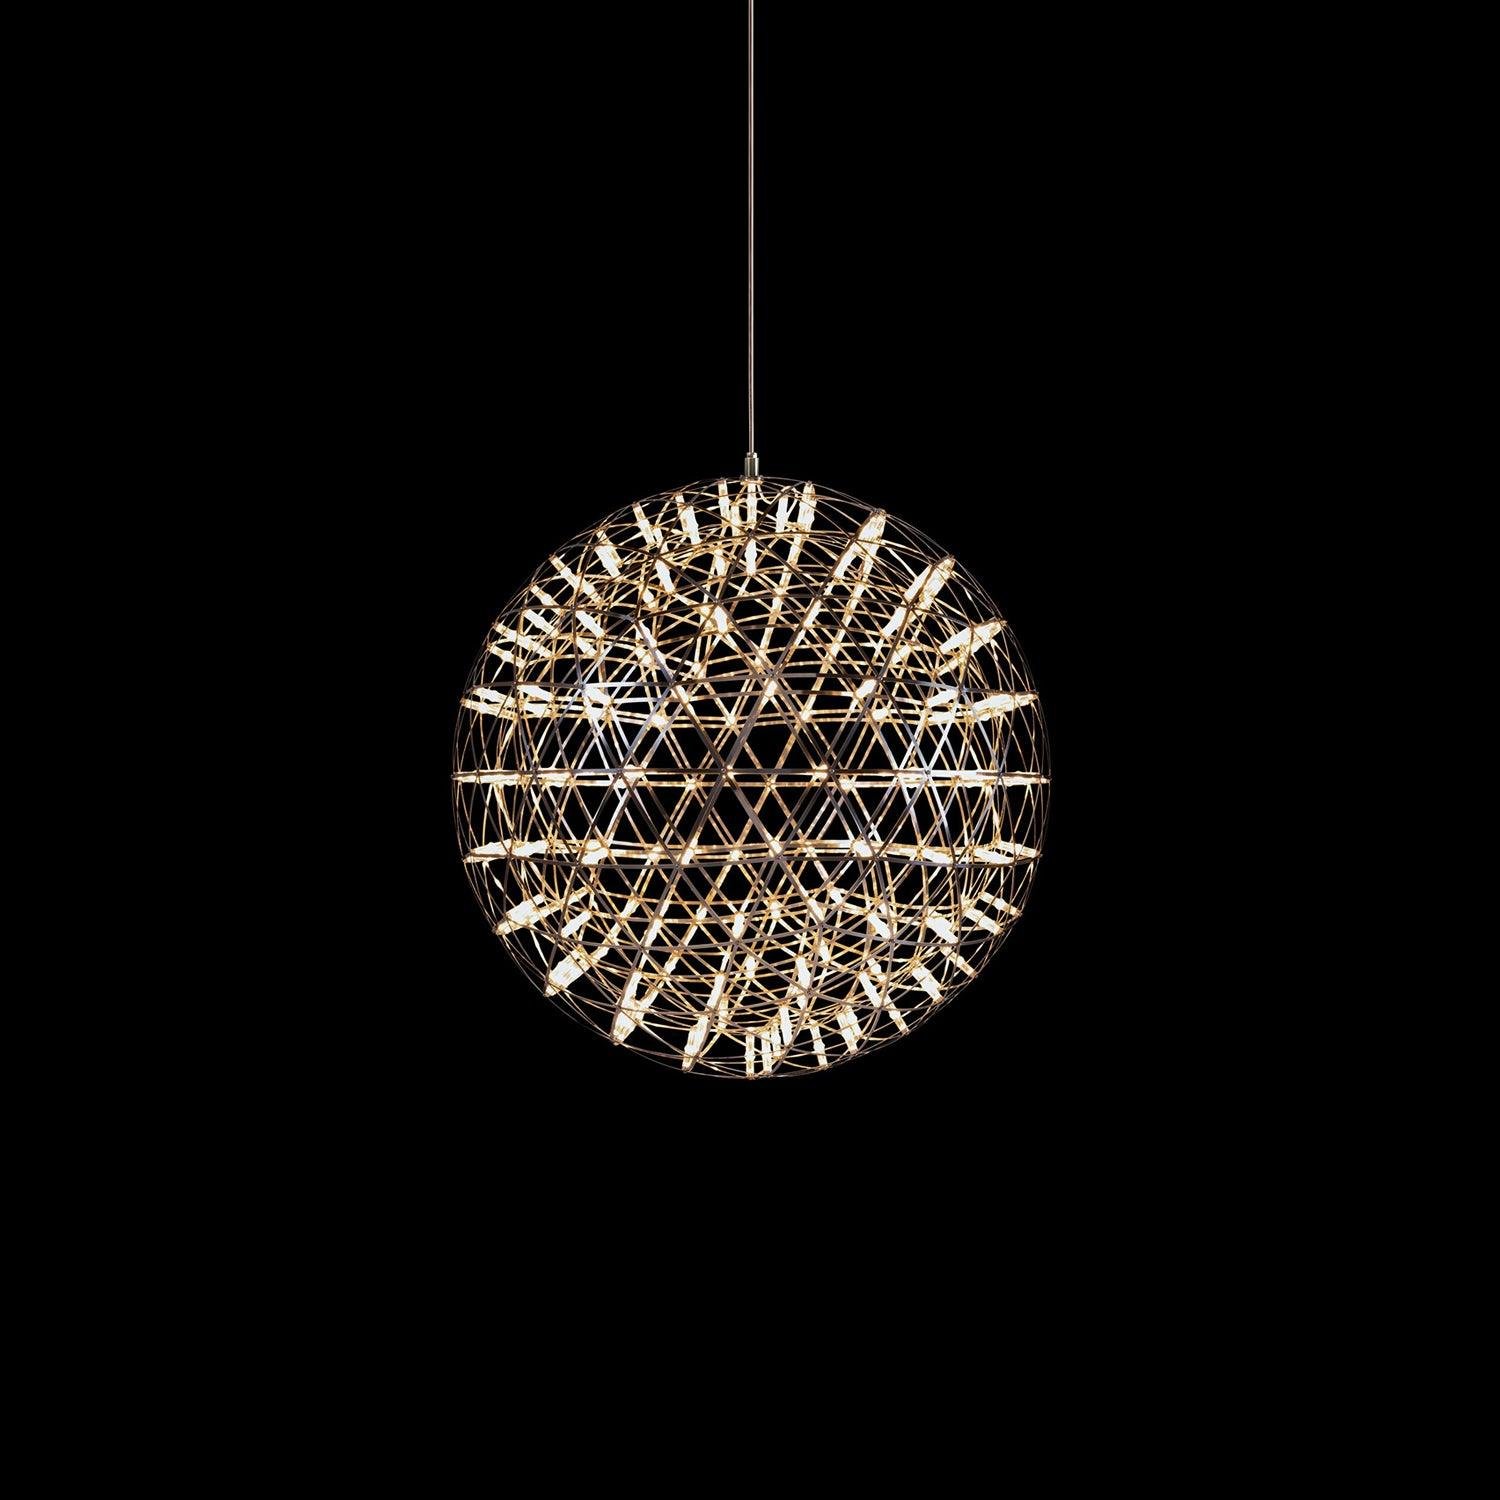 Cool White Spark Ball Pendant Light with 42 Heads, 40cm Diameter